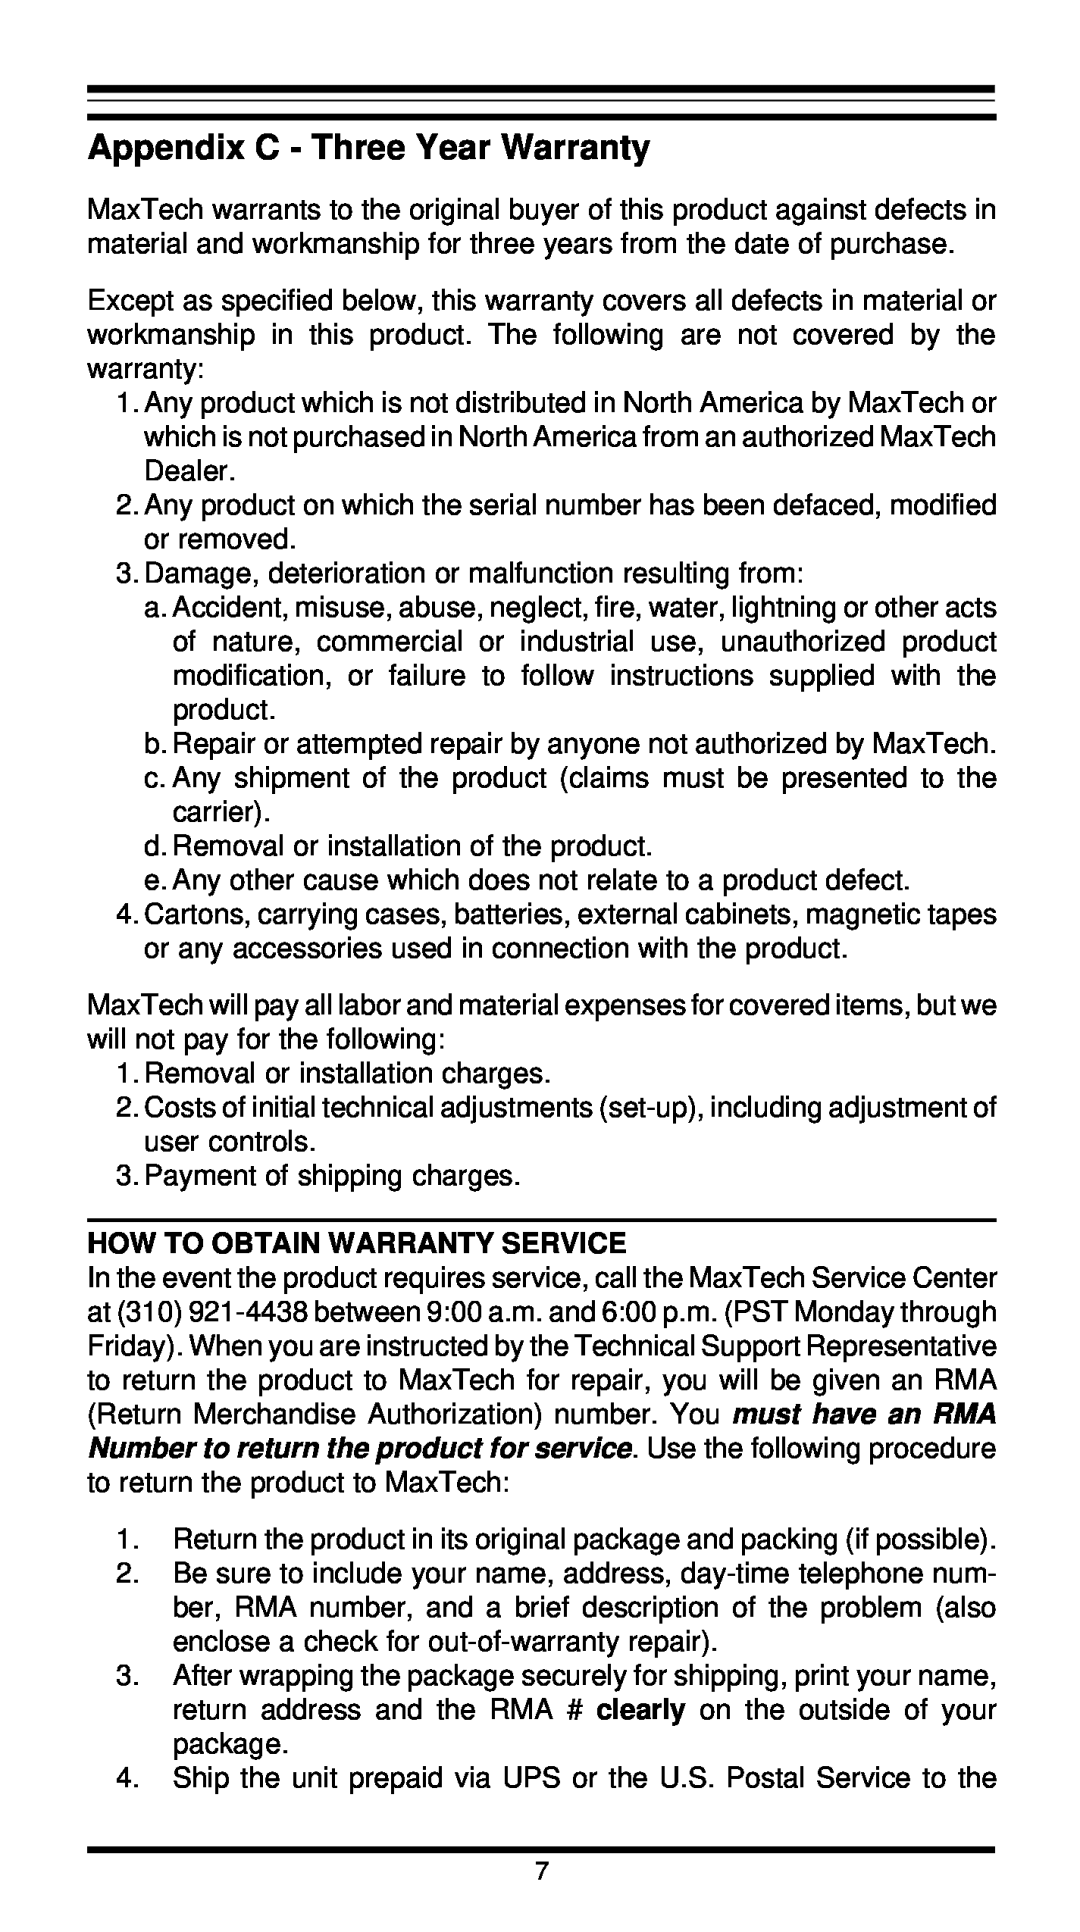 MaxTech XT4862 user manual Appendix C - Three Year Warranty, How To Obtain Warranty Service 